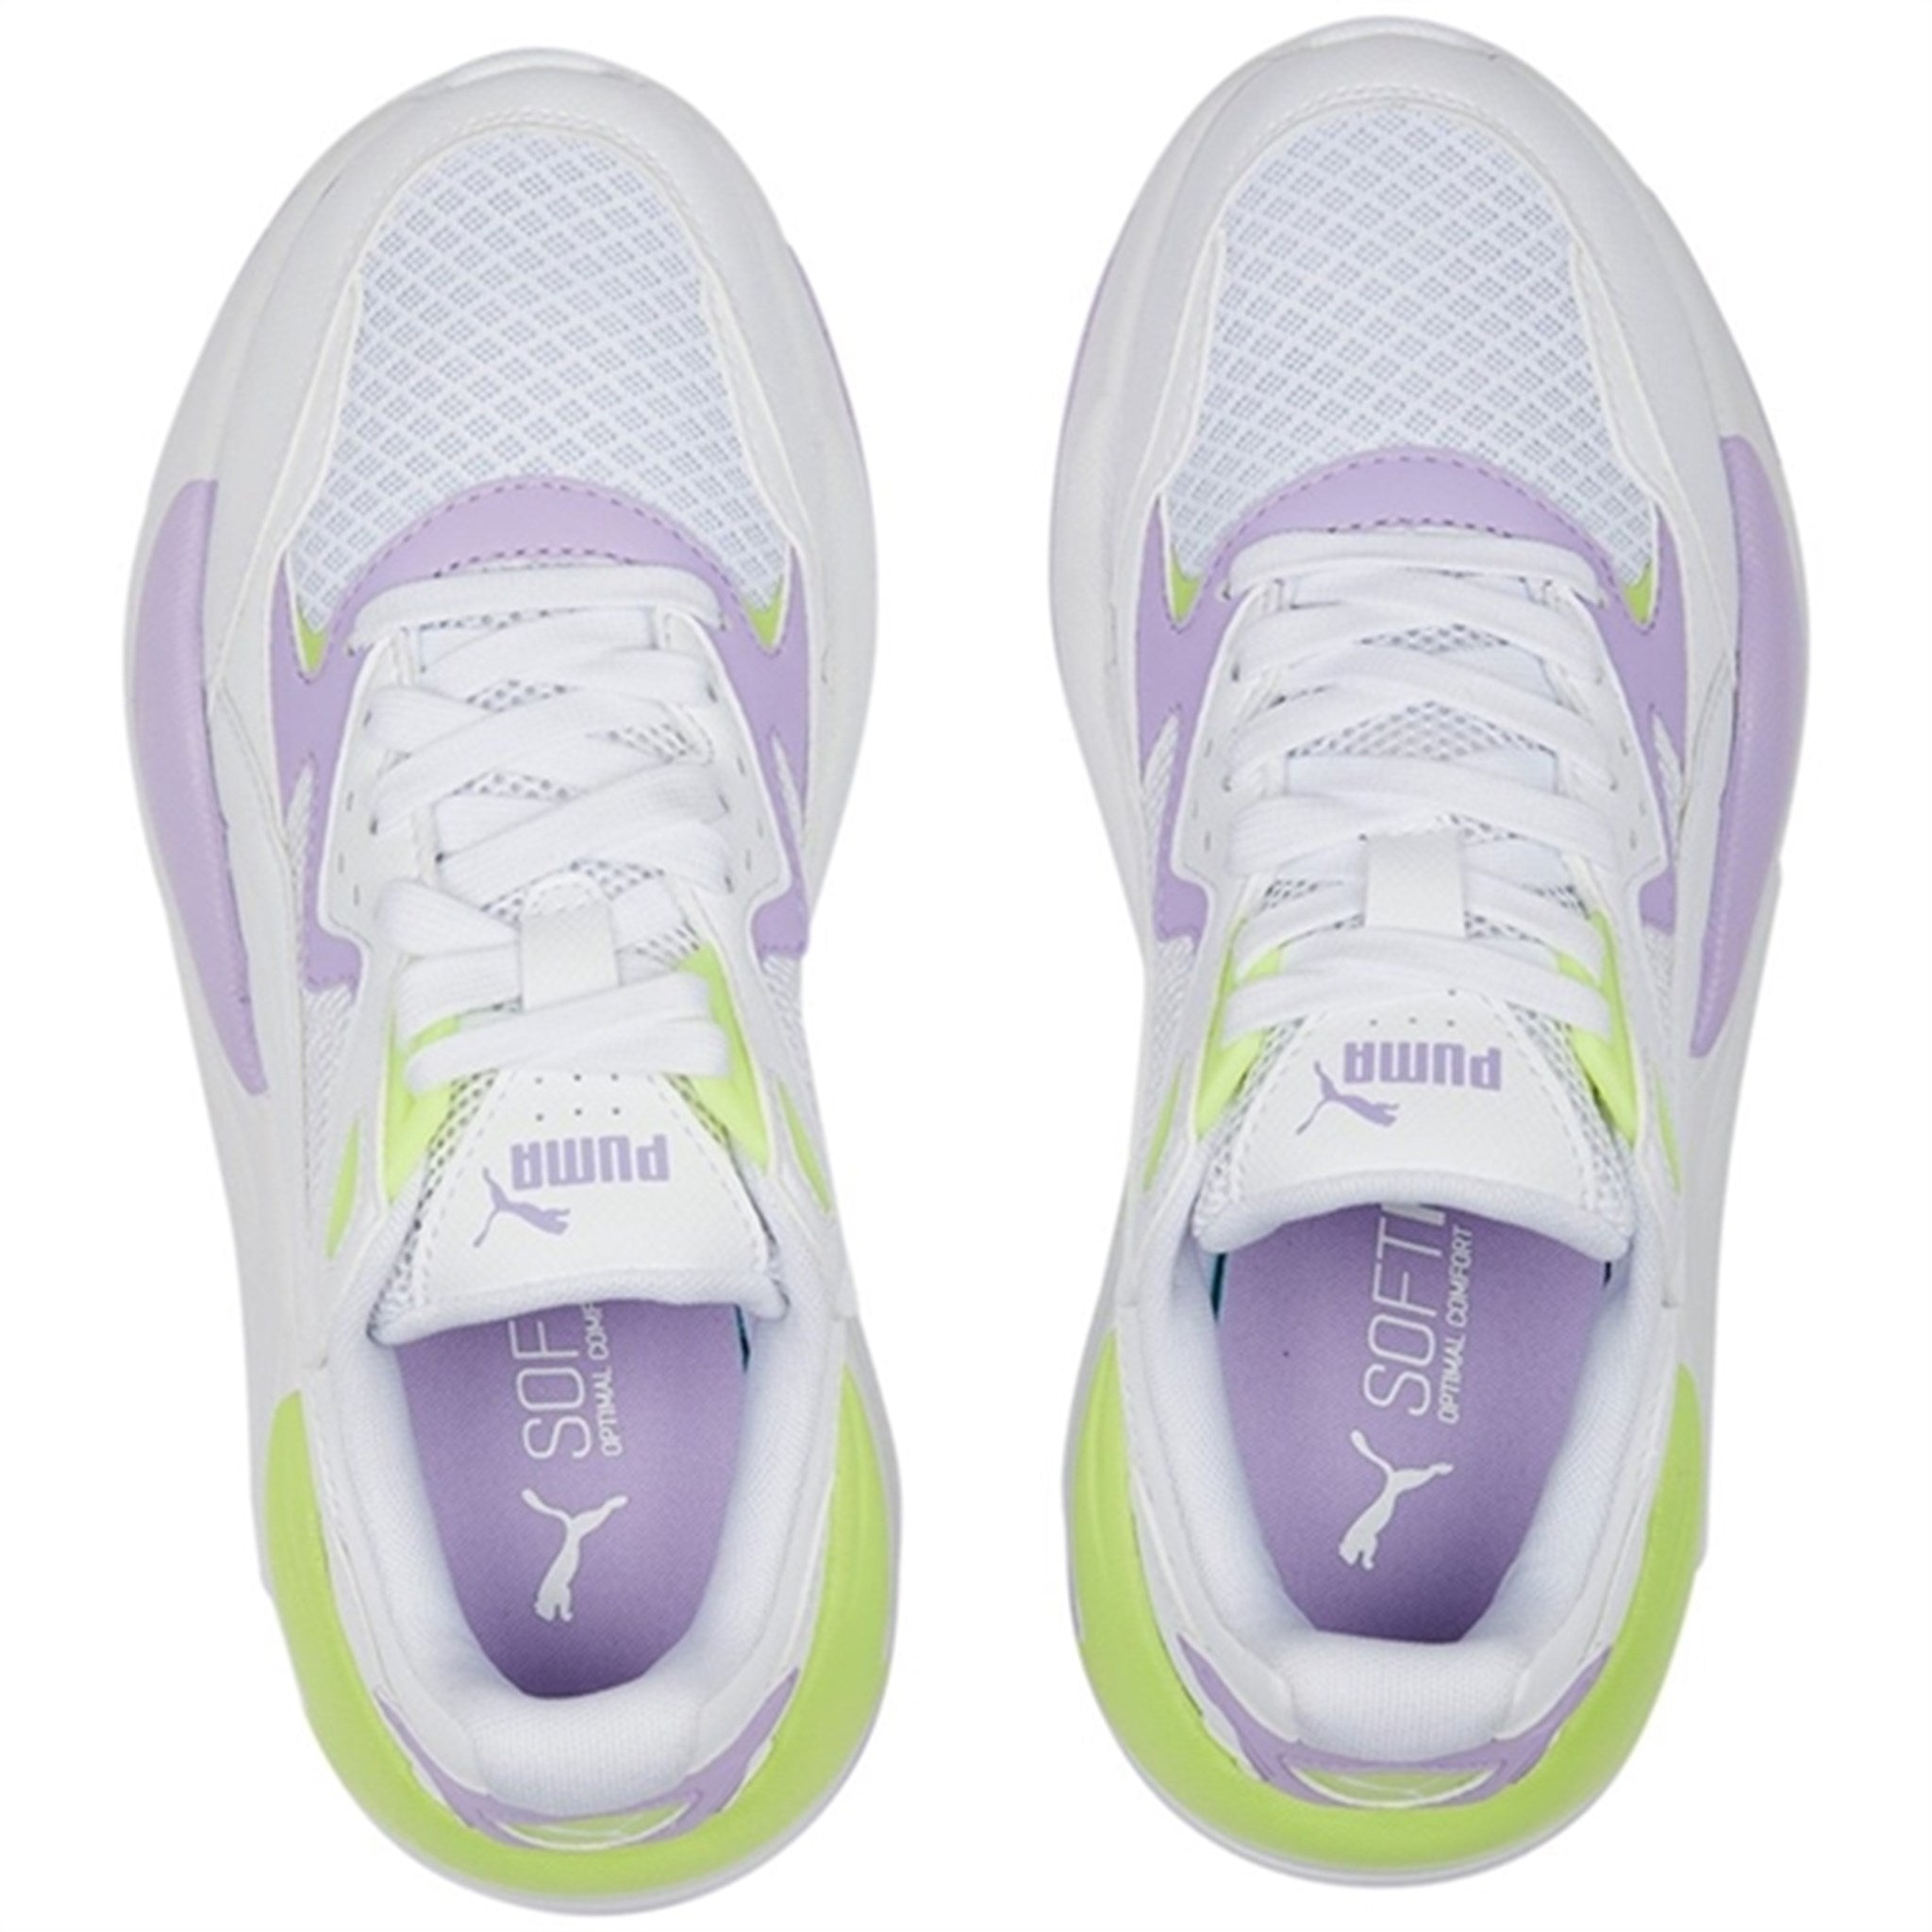 Puma X-Ray Speed Play Jr White-Vivid Violet-Lily Pad Sneakers 6